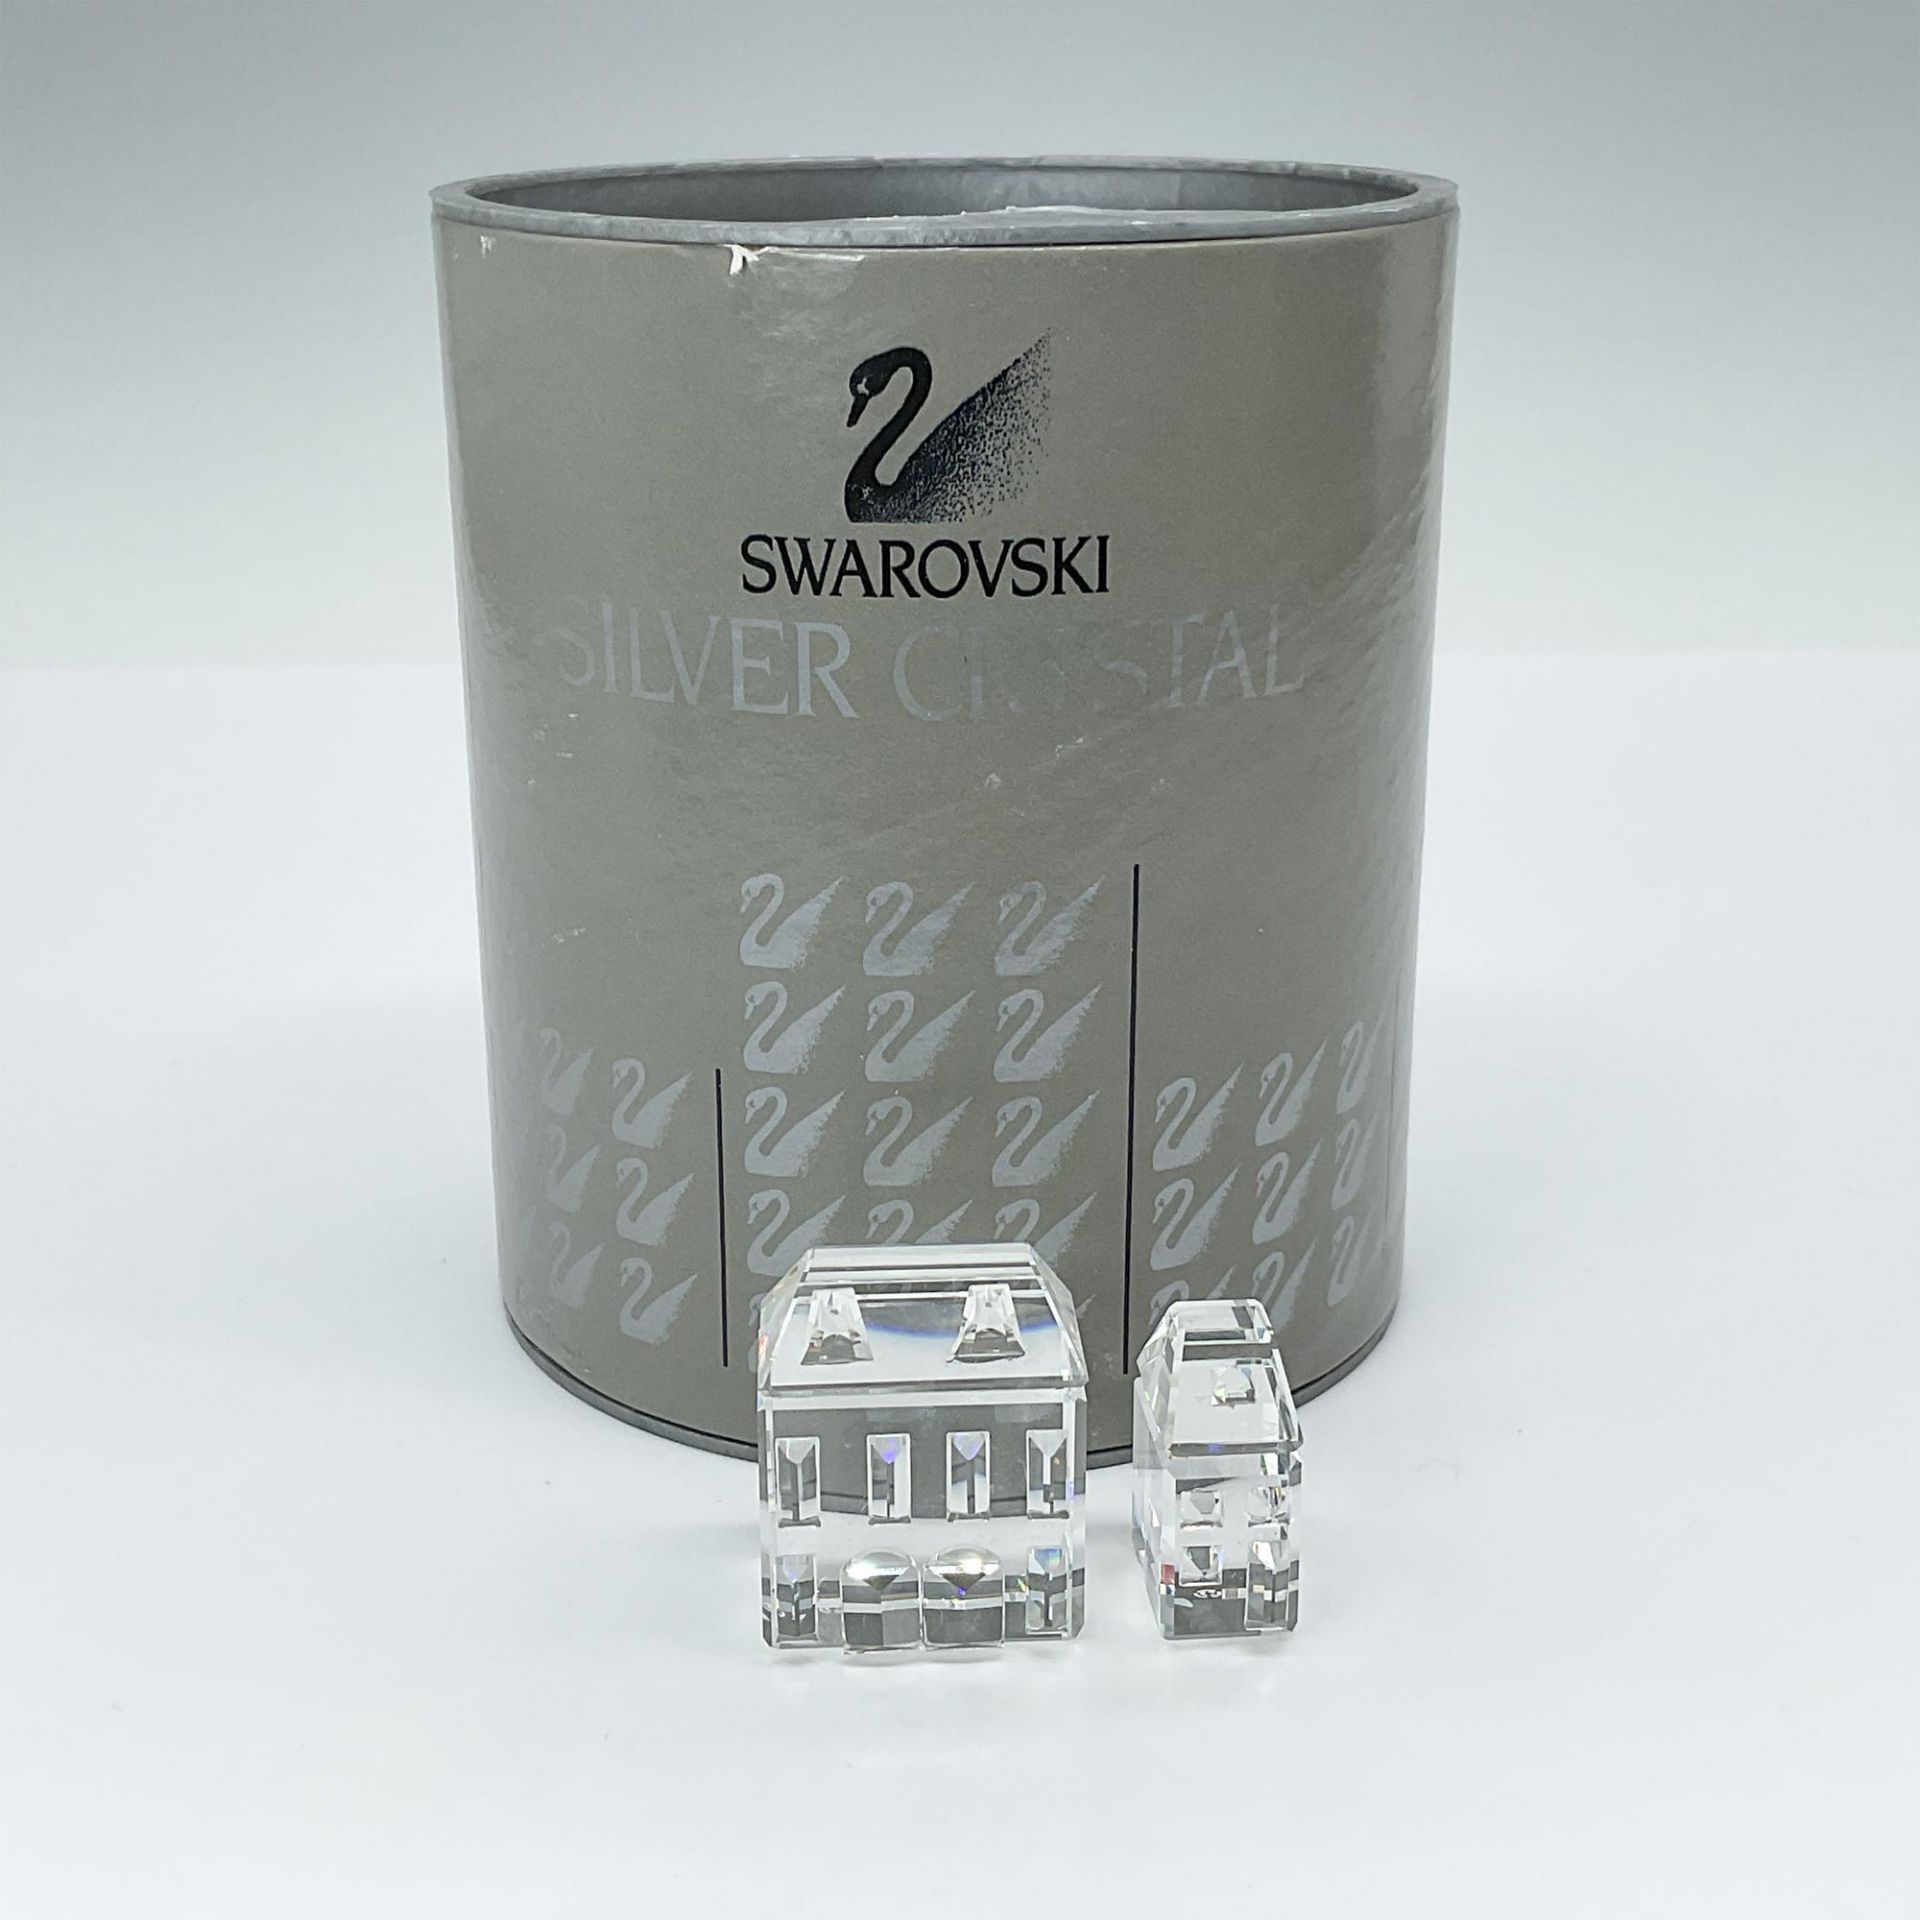 2pc Swarovski Silver Crystal Figurines, City Houses - Image 4 of 4